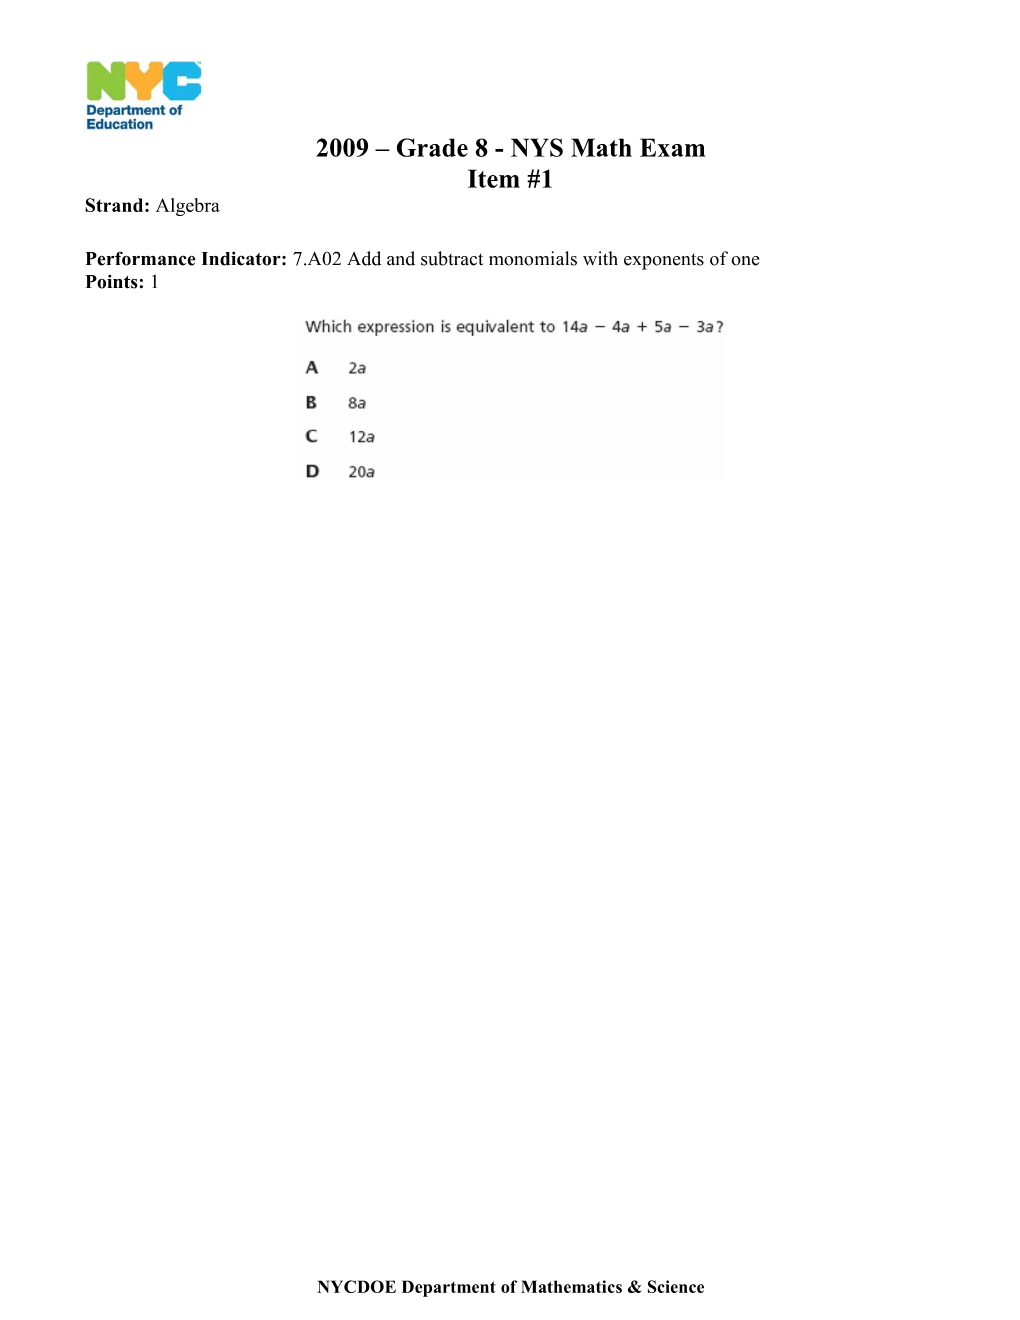 2009 Grade 8 -NYS Math Exam